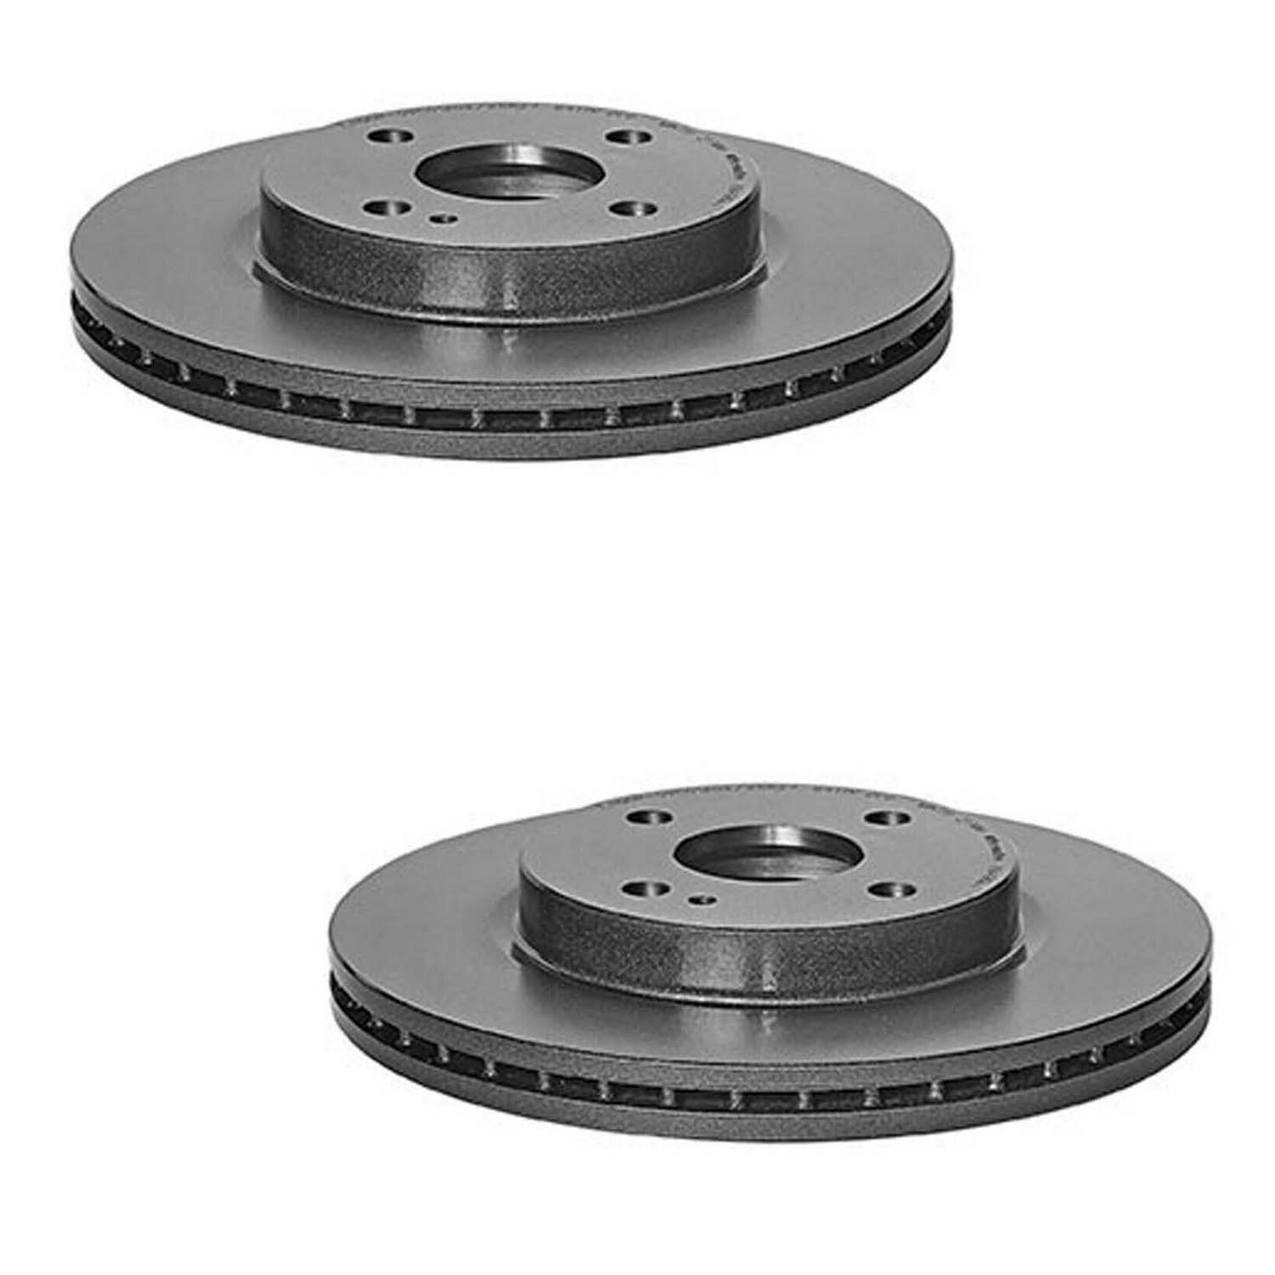 Mazda Disc Brake Pad and Rotor Kit – Front (258mm) (Ceramic